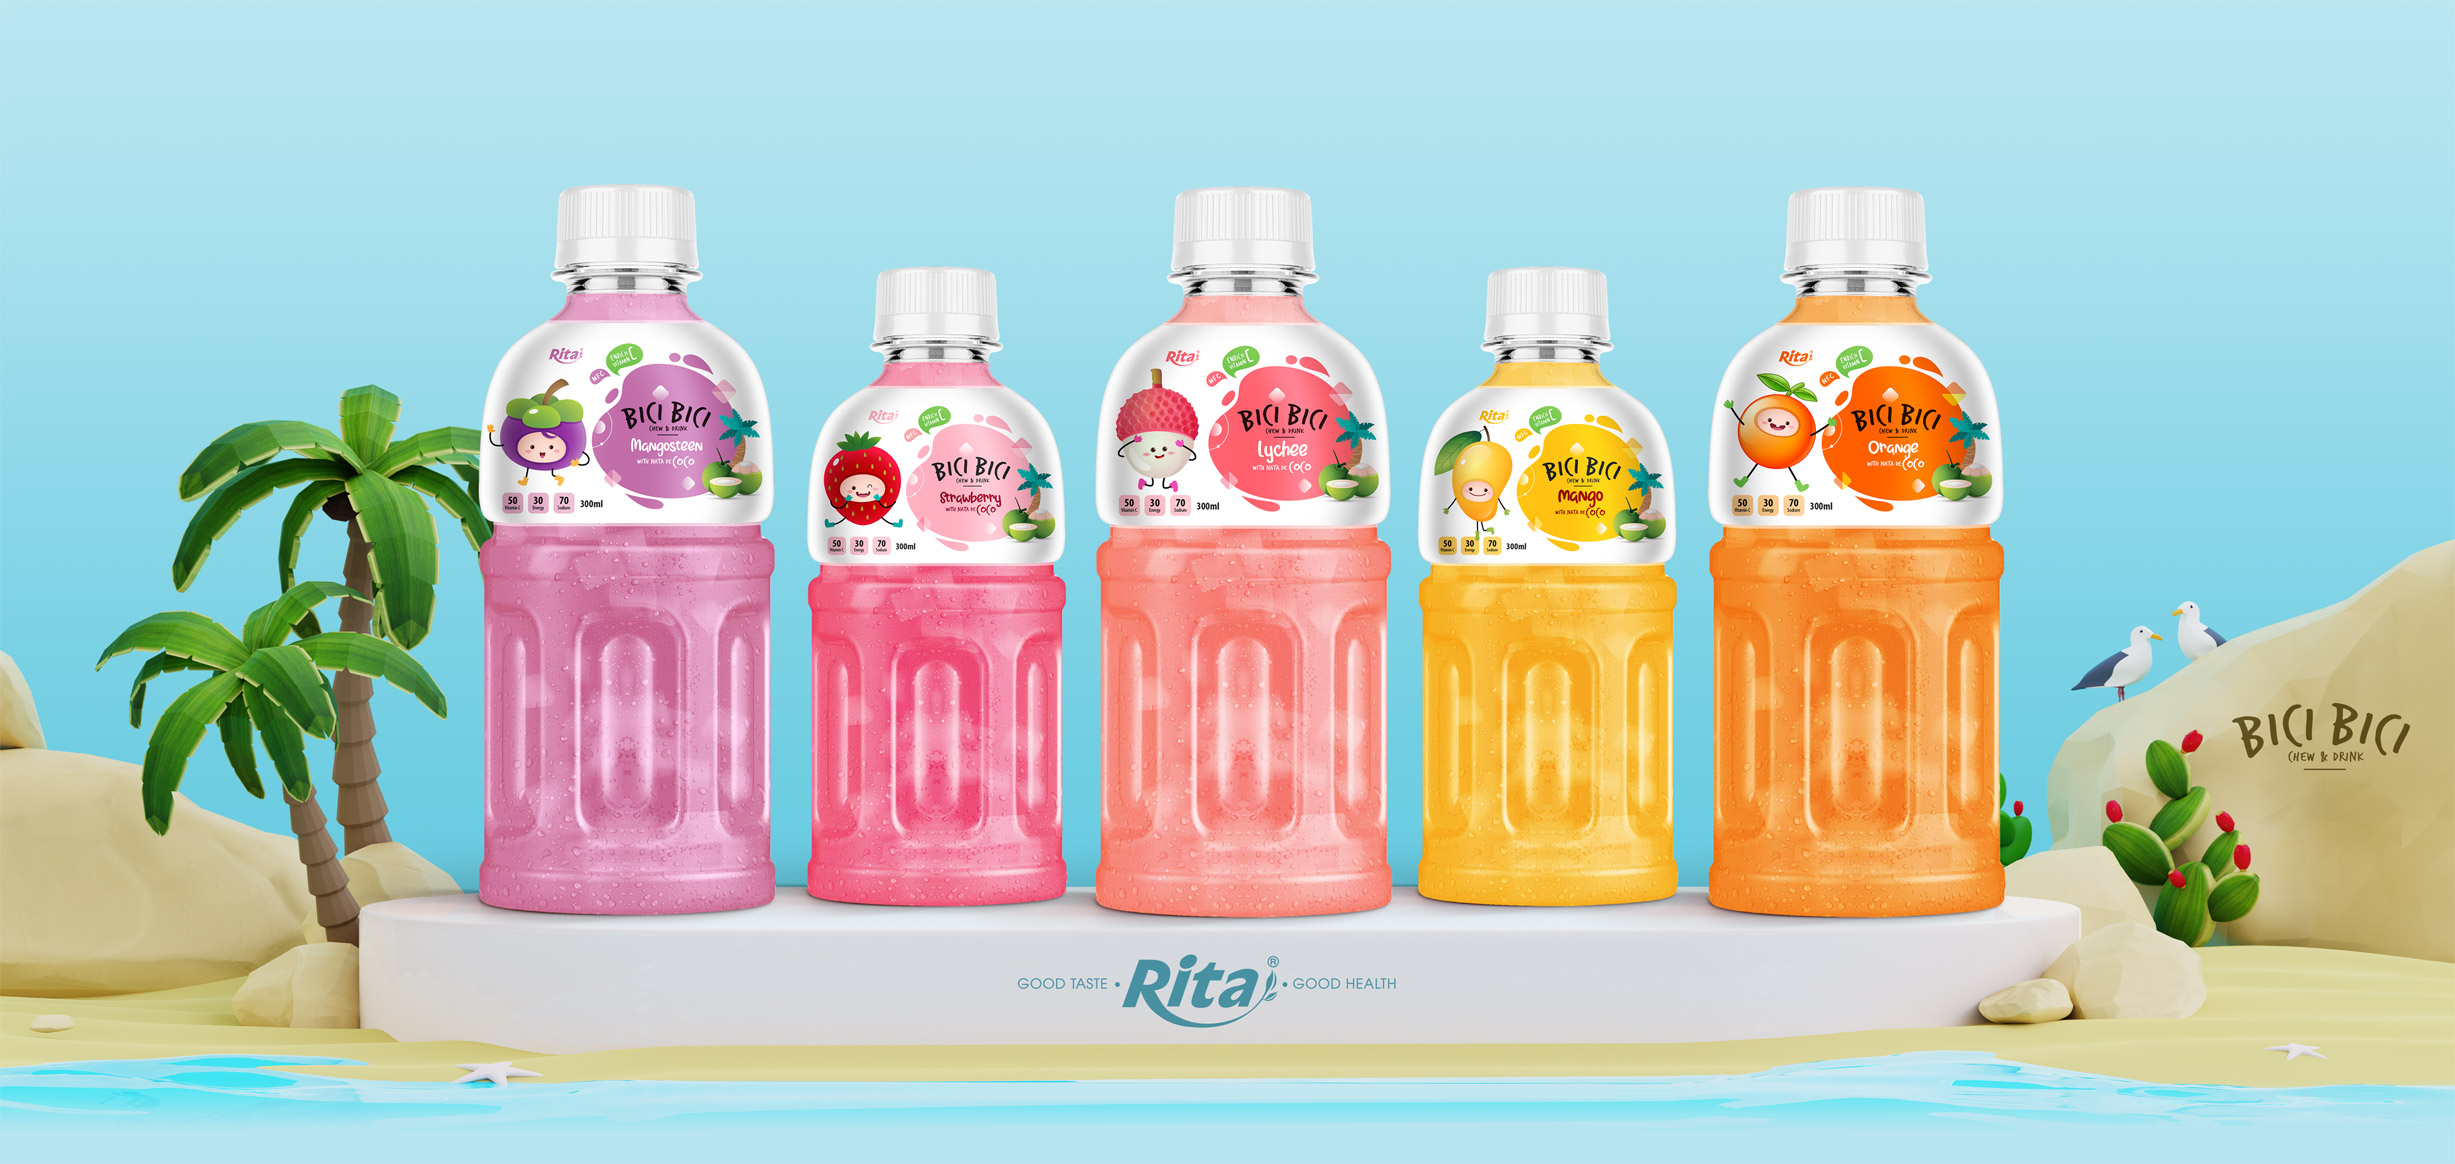 Design Bici Bici tropical juice with nata de coco 300ml Pet bottle